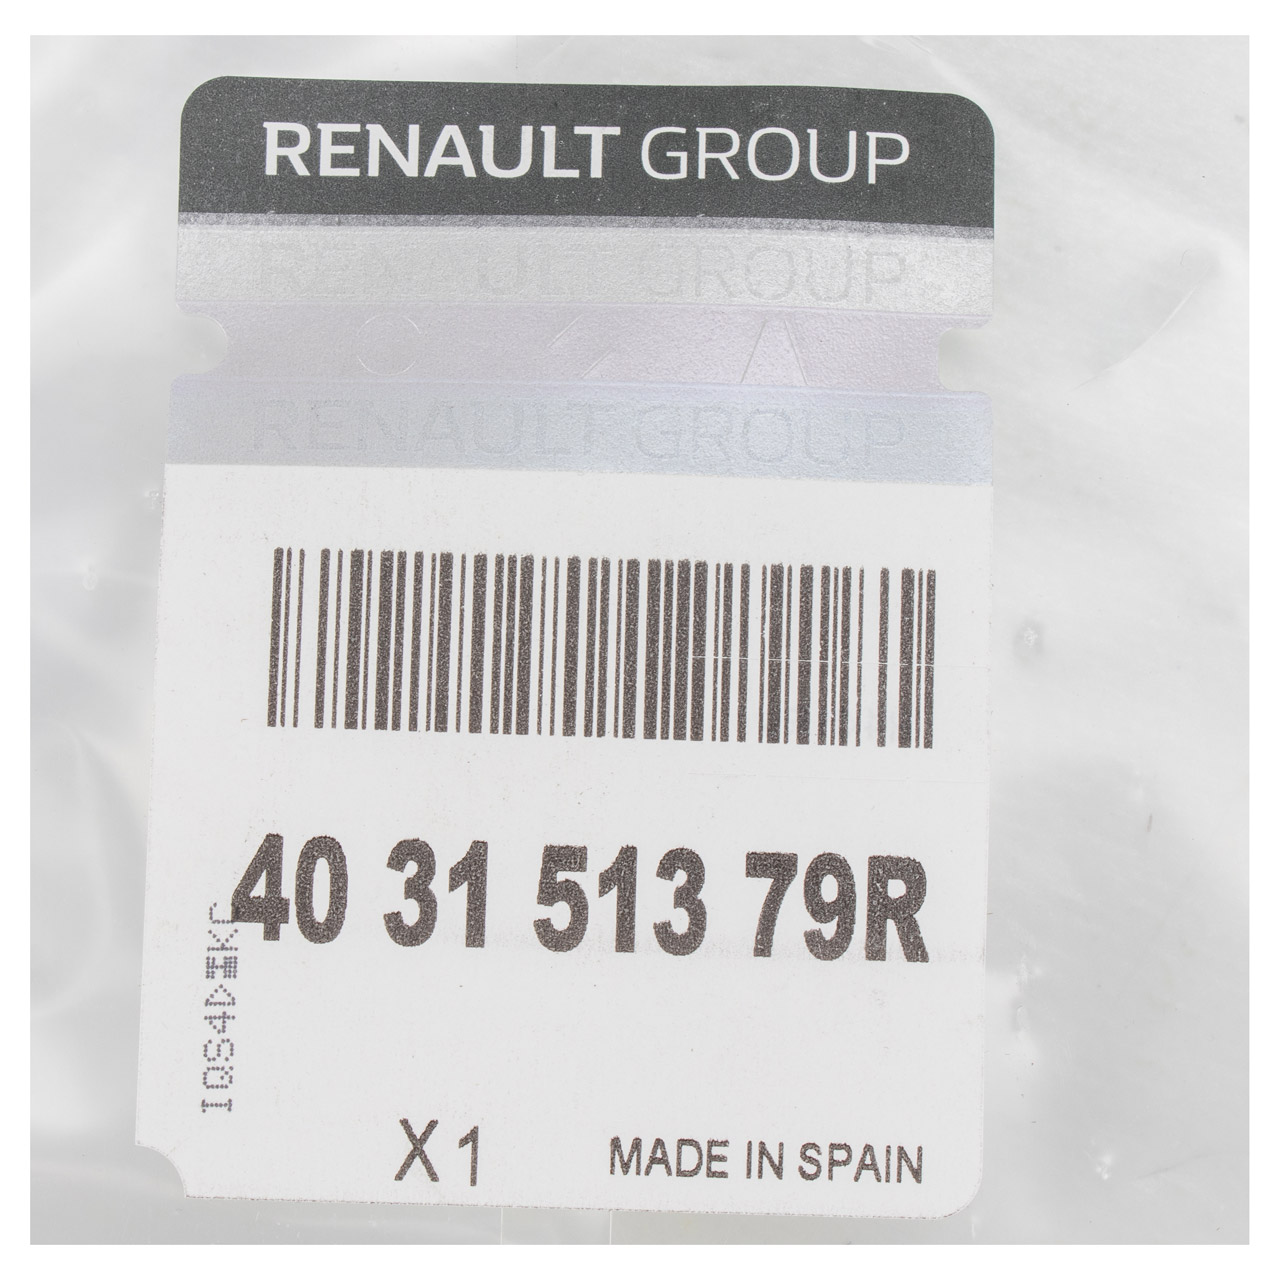 1x ORIGINAL Renault Radkappe Radblende 16 Zoll Silber Megane 3 Scenic 3 403151379R